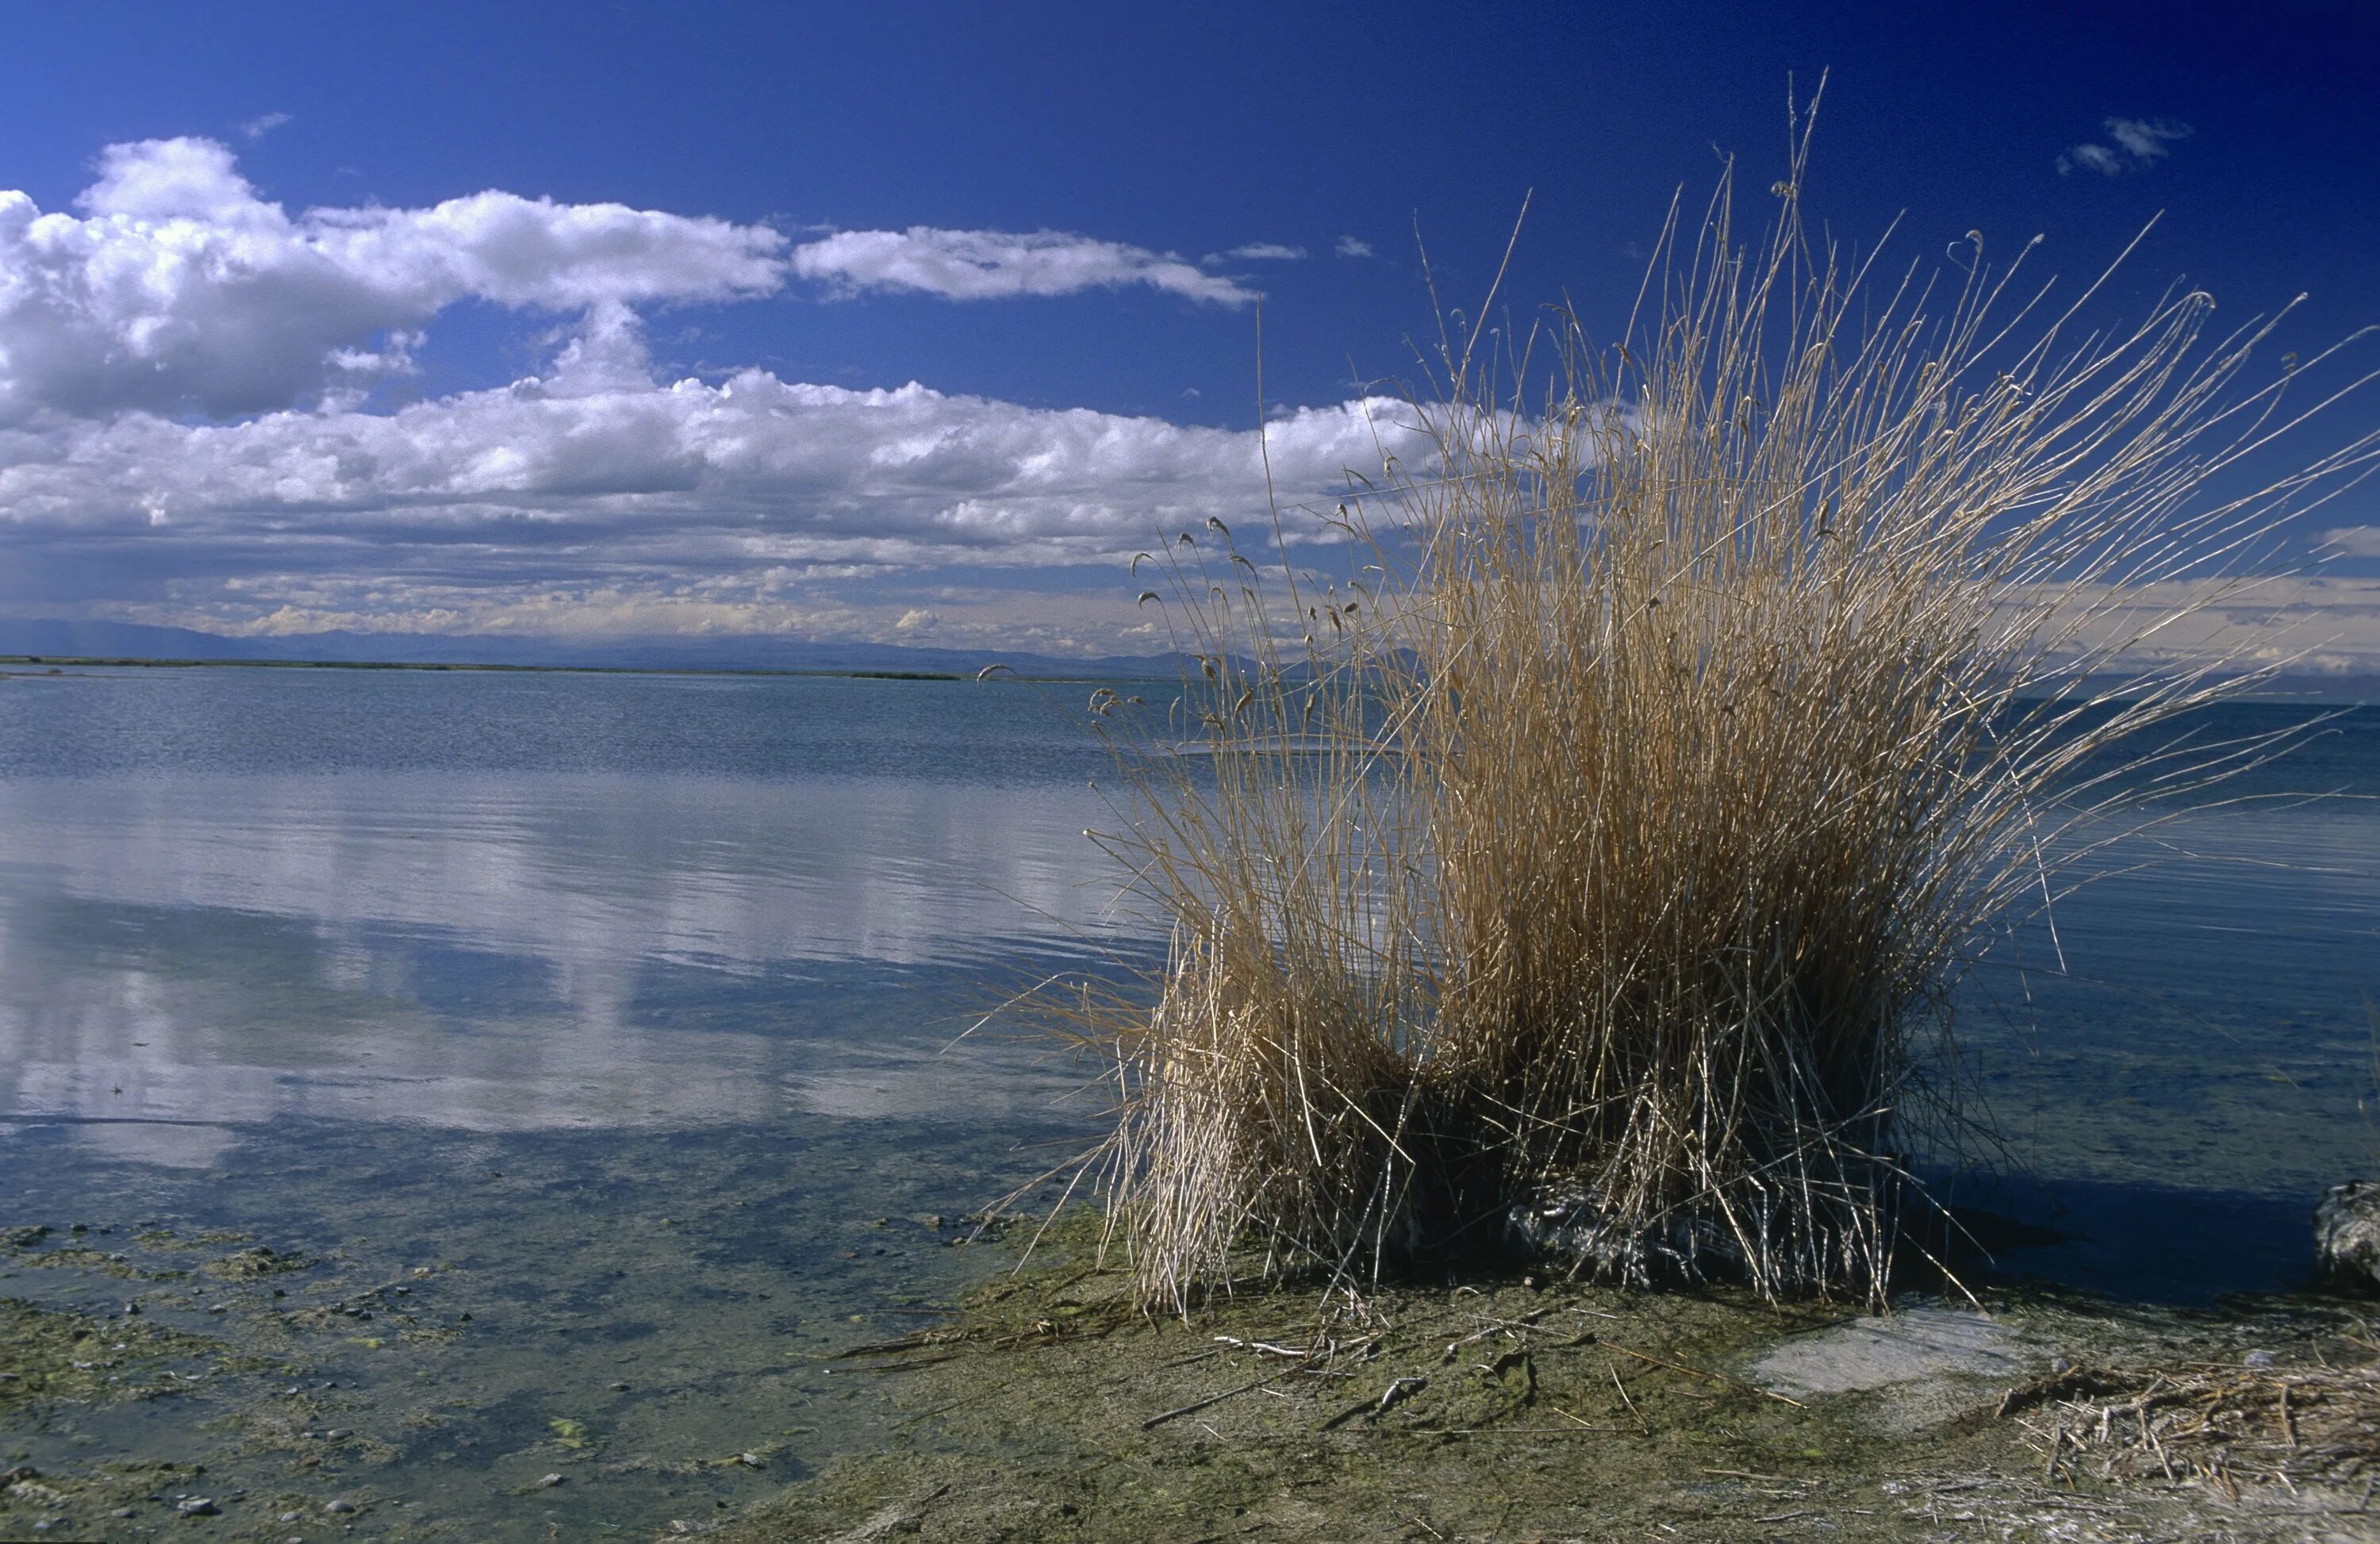 УВС нуур озеро. Озеро Убсу Нур Монголия. УВС Монголия. УВС нуур озеро фото. Котловина больших озер